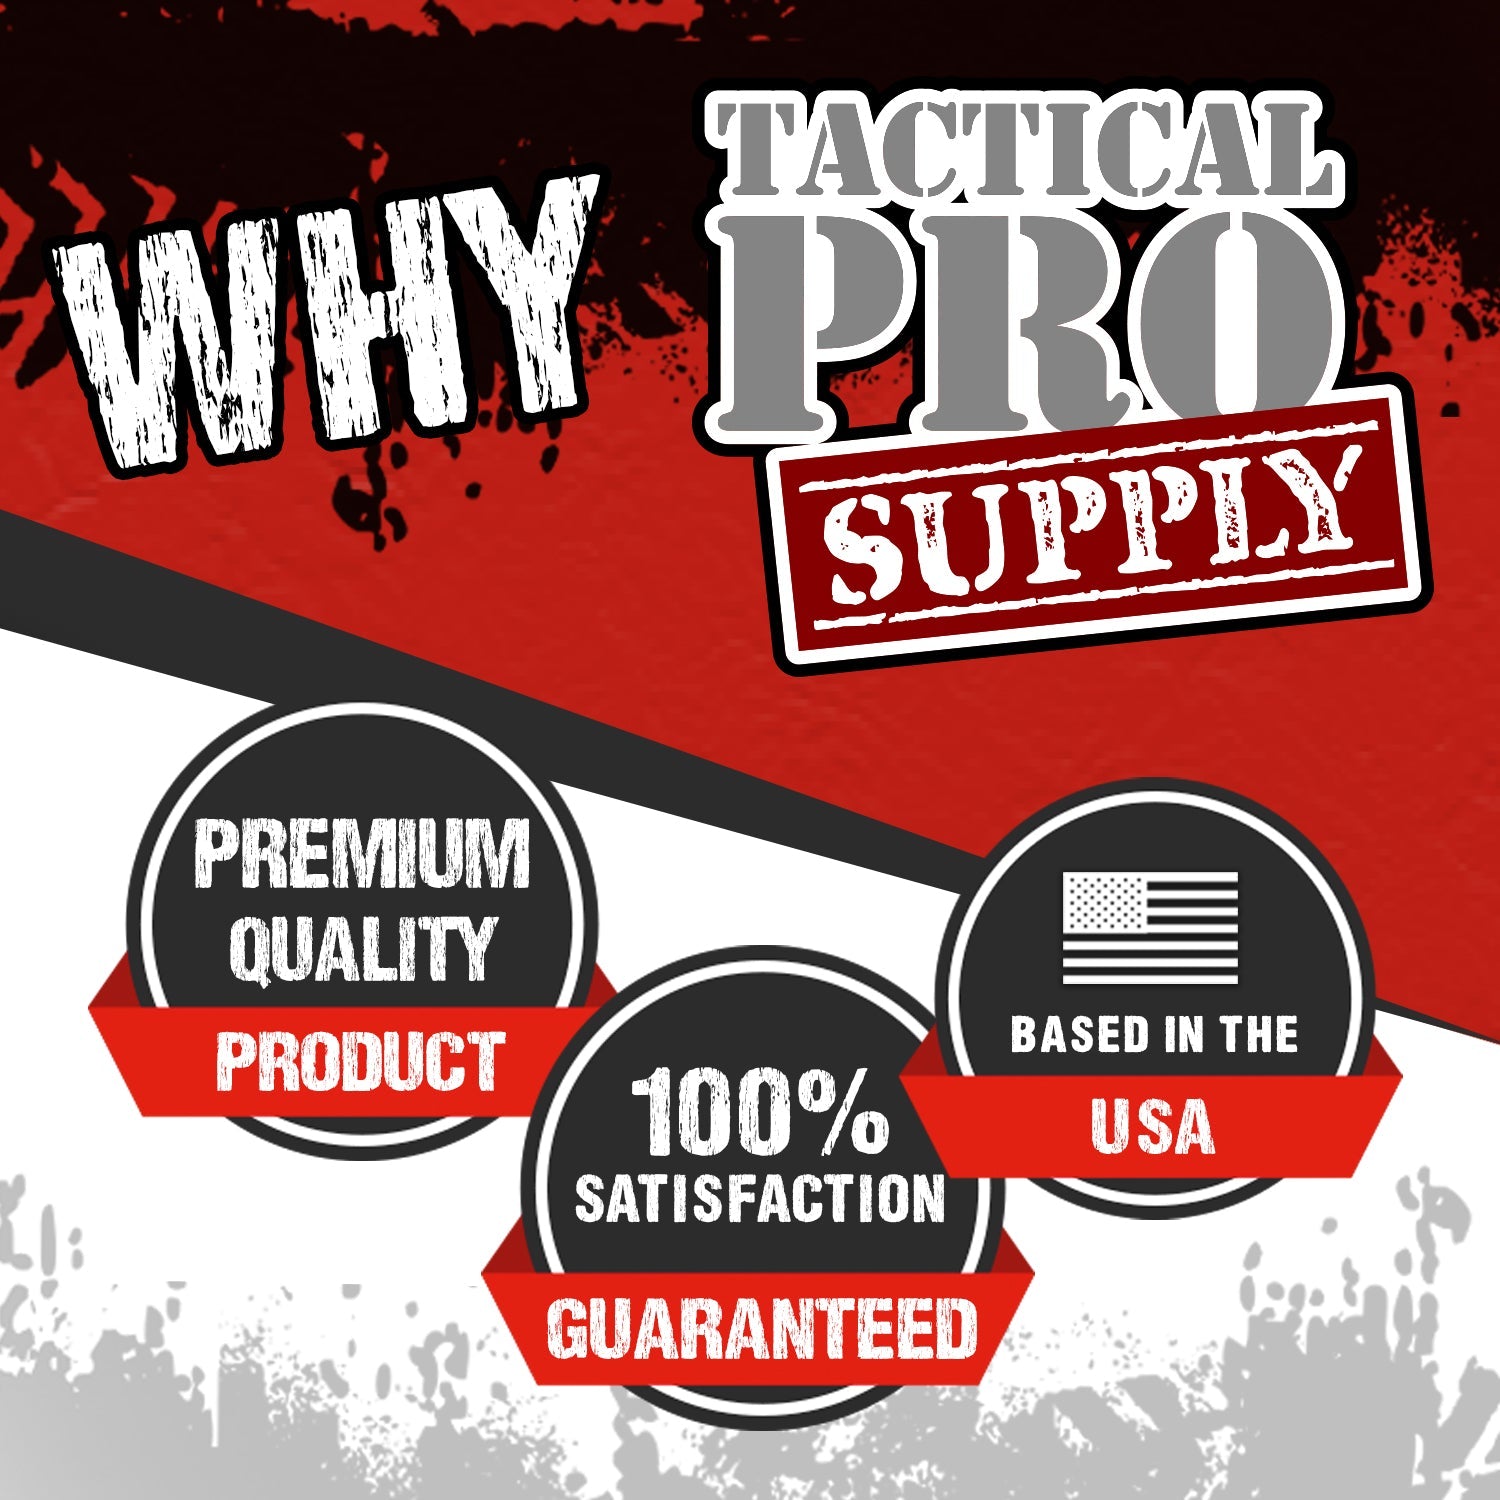 Sweet Land of Liberty - Tactical Pro Supply, LLC